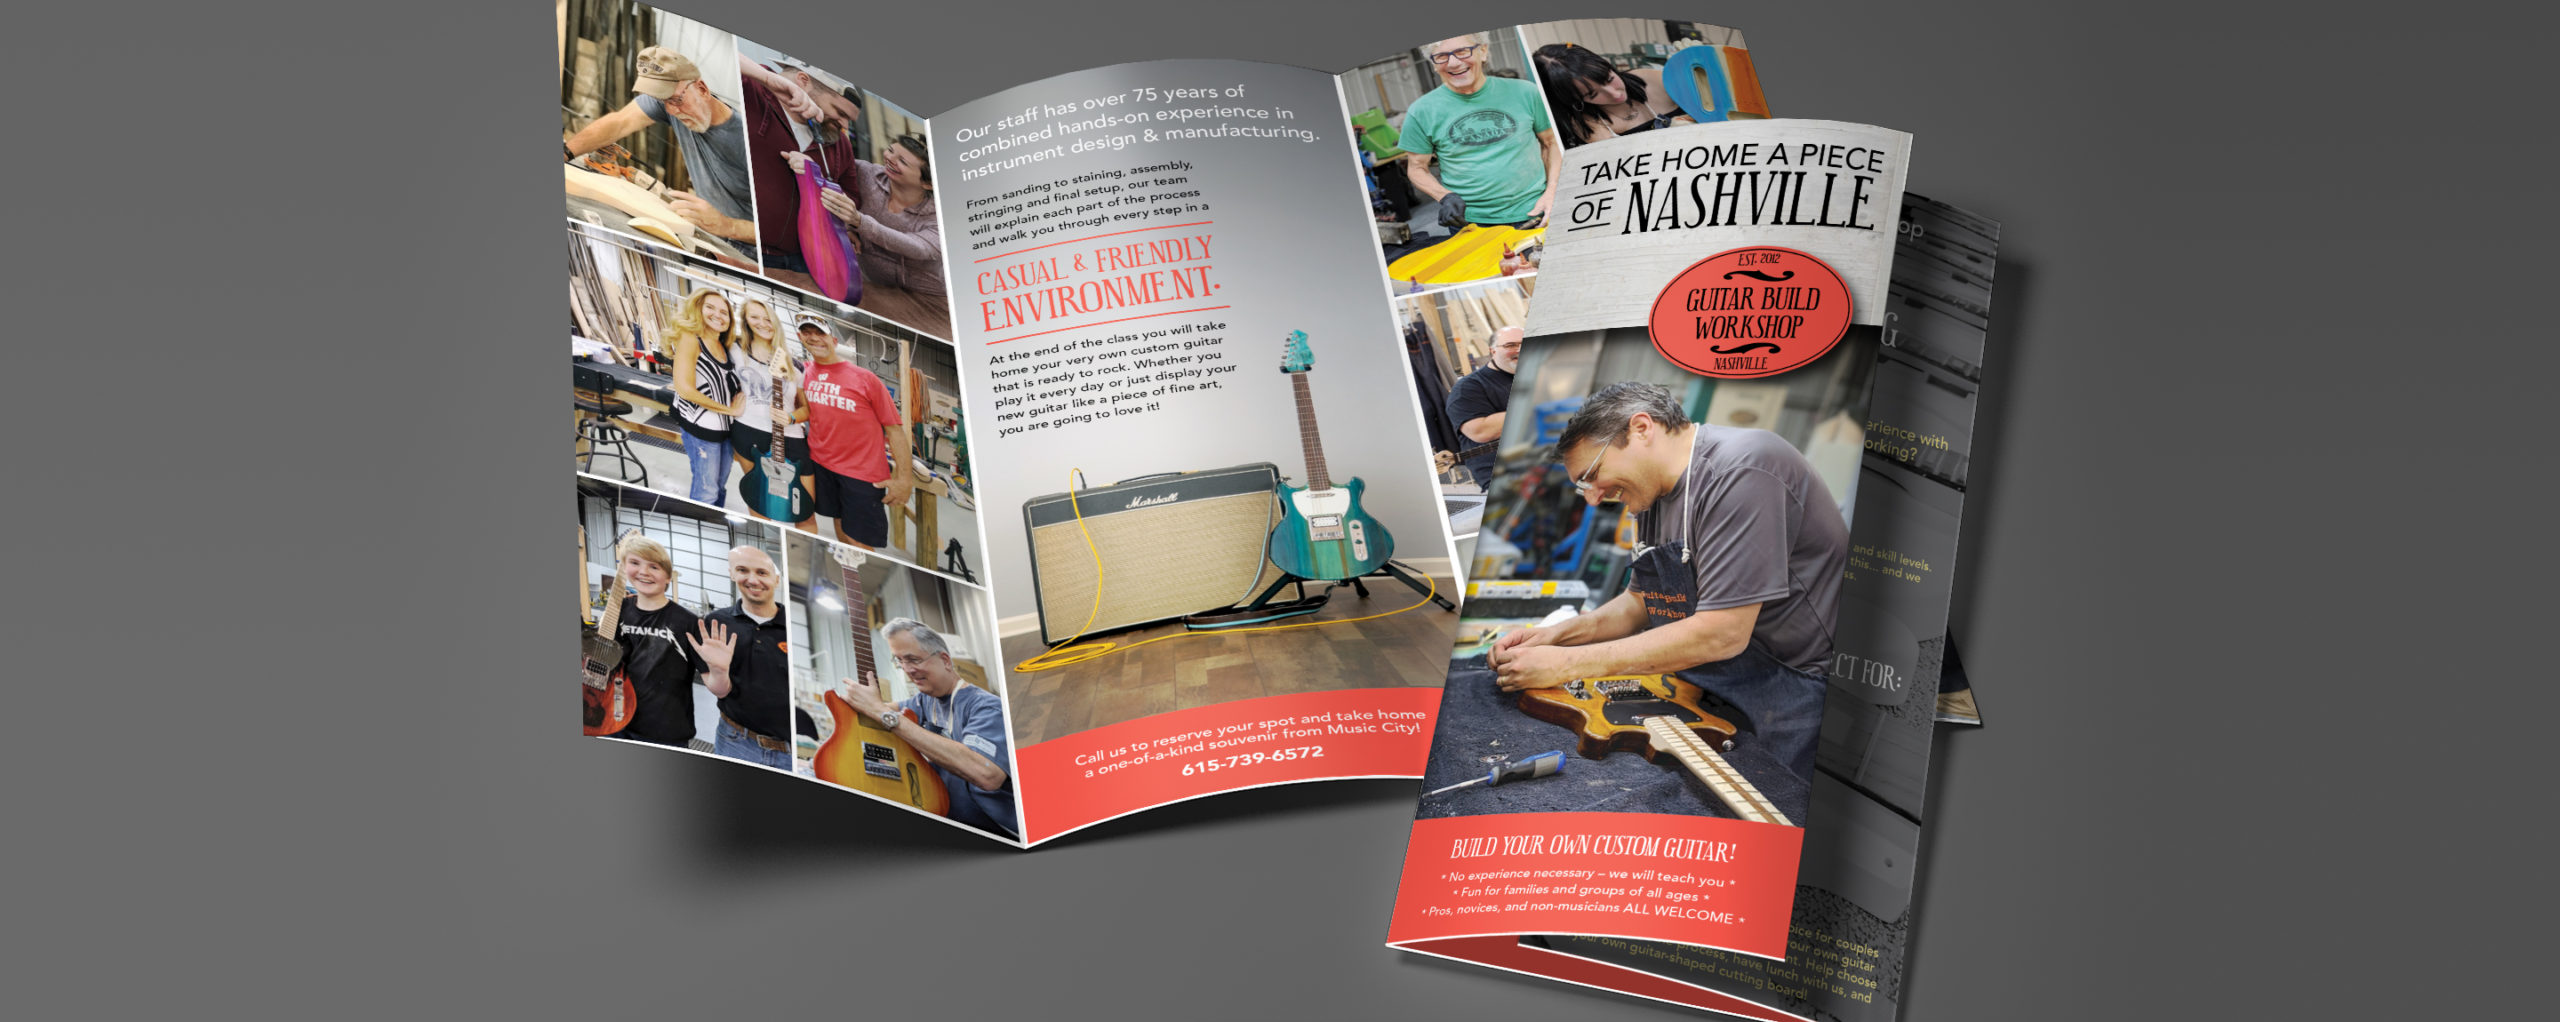 Guitar Build Workshop Brochure